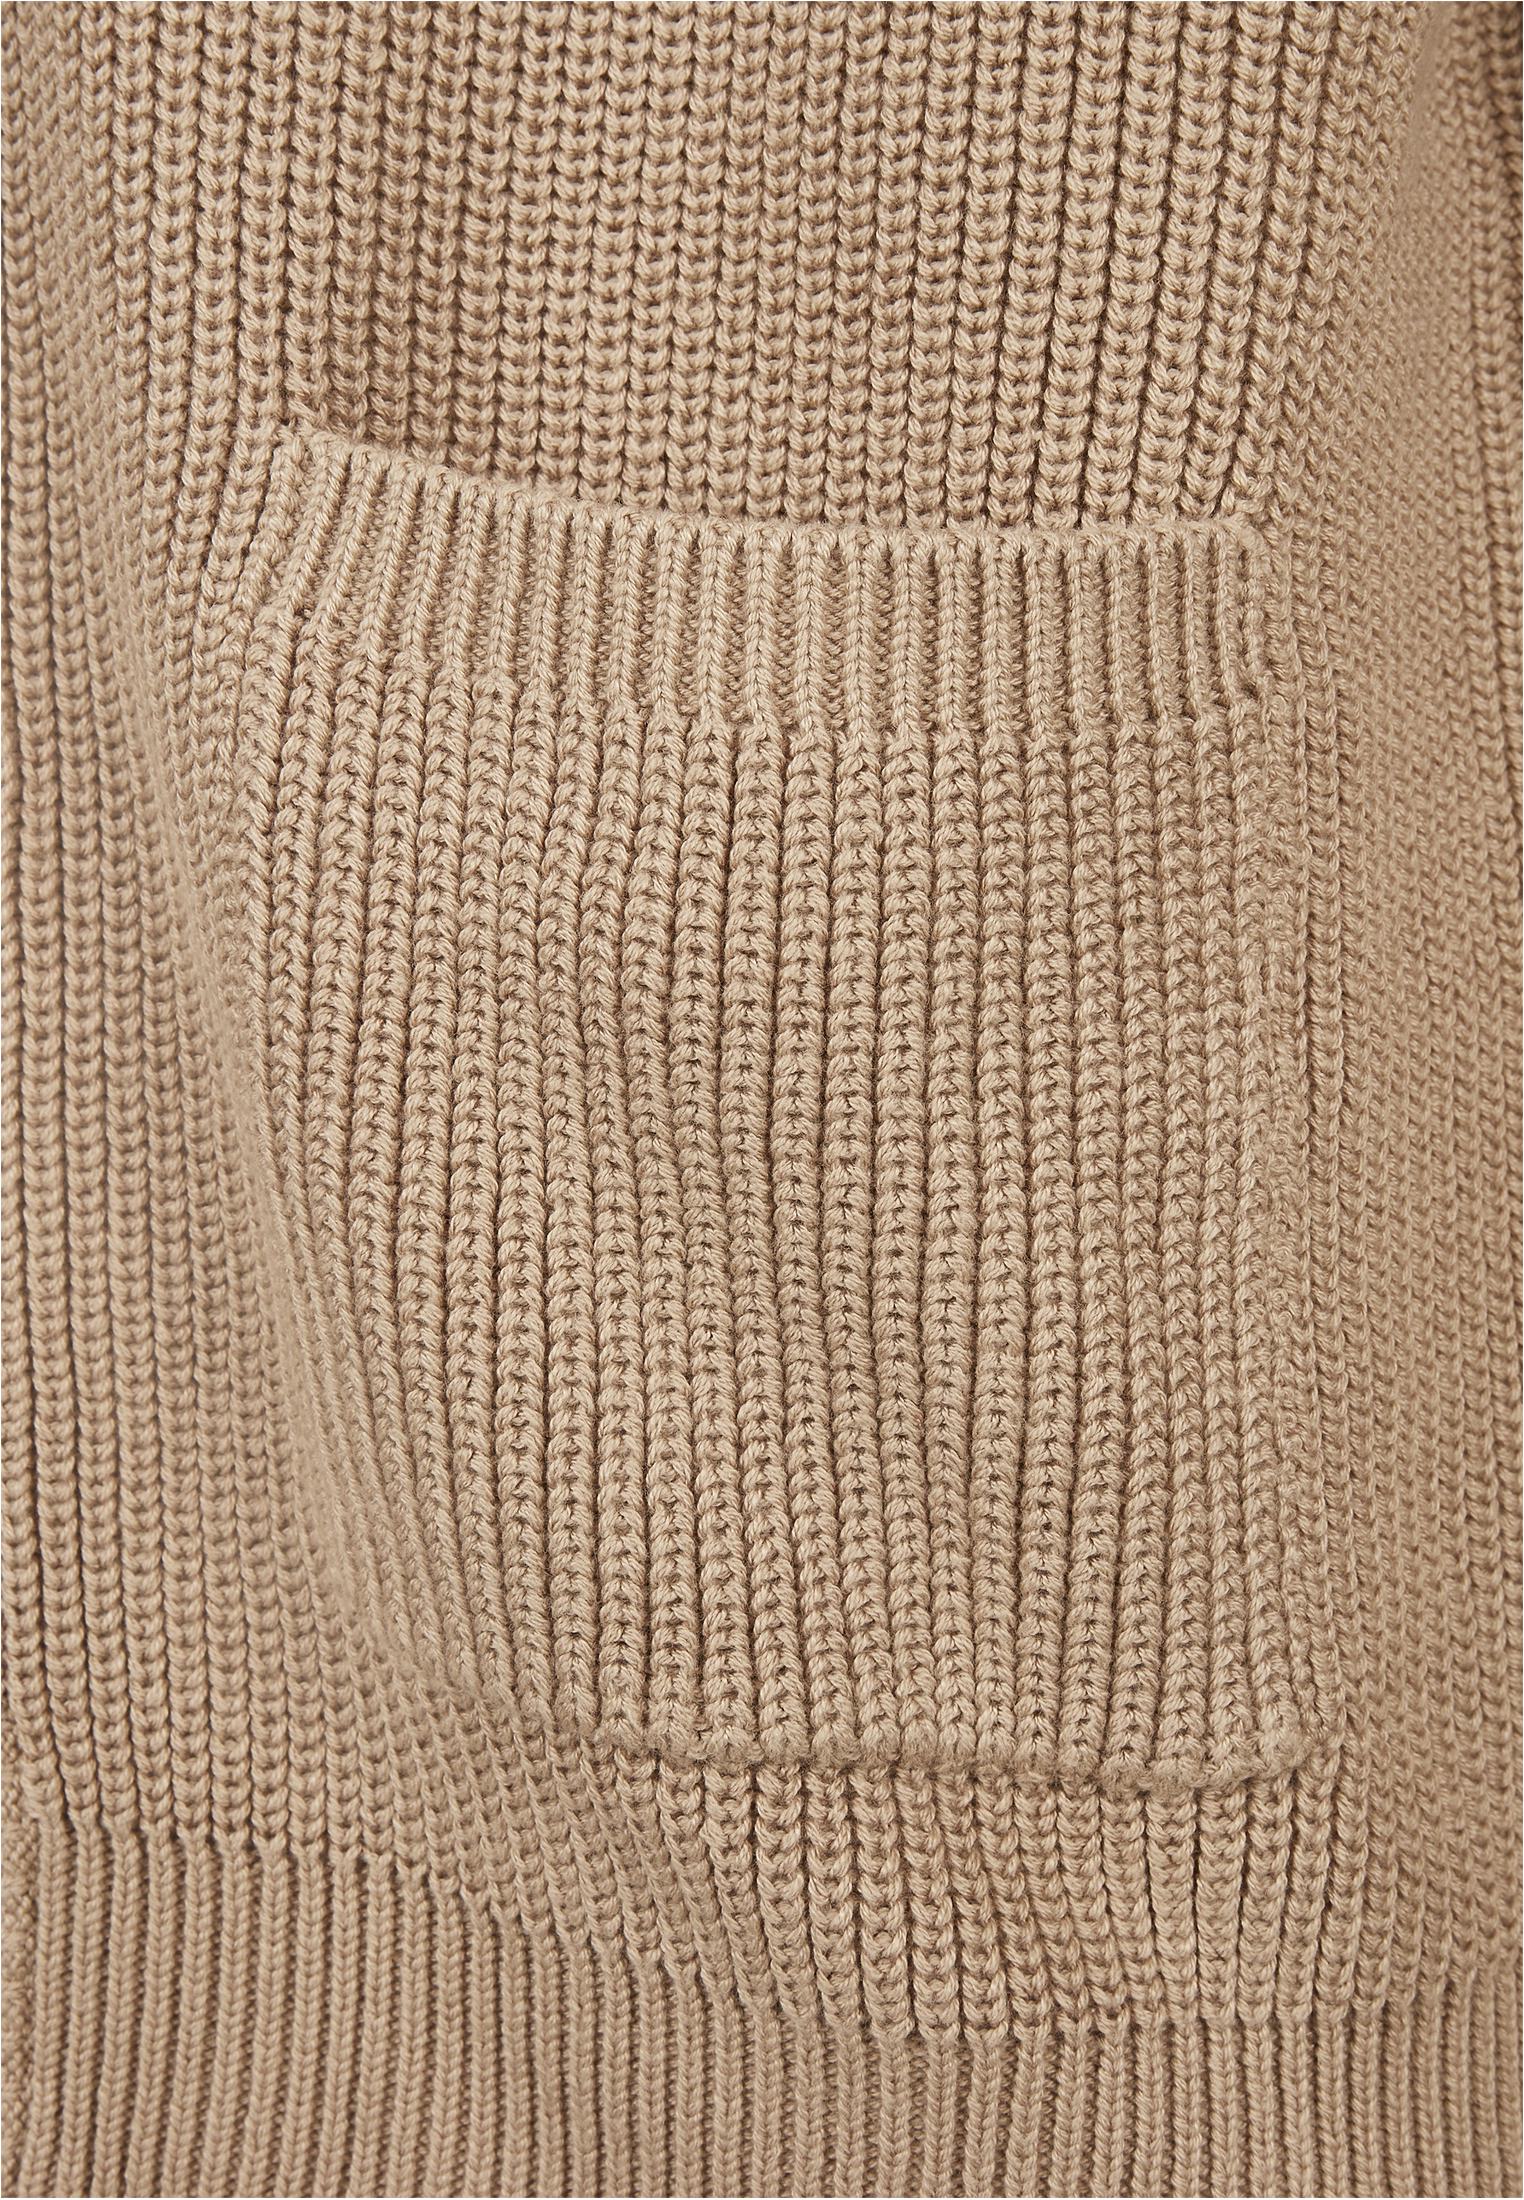 UC Men Boxy Cardigan (Farbe: warm sand / Größe: L)